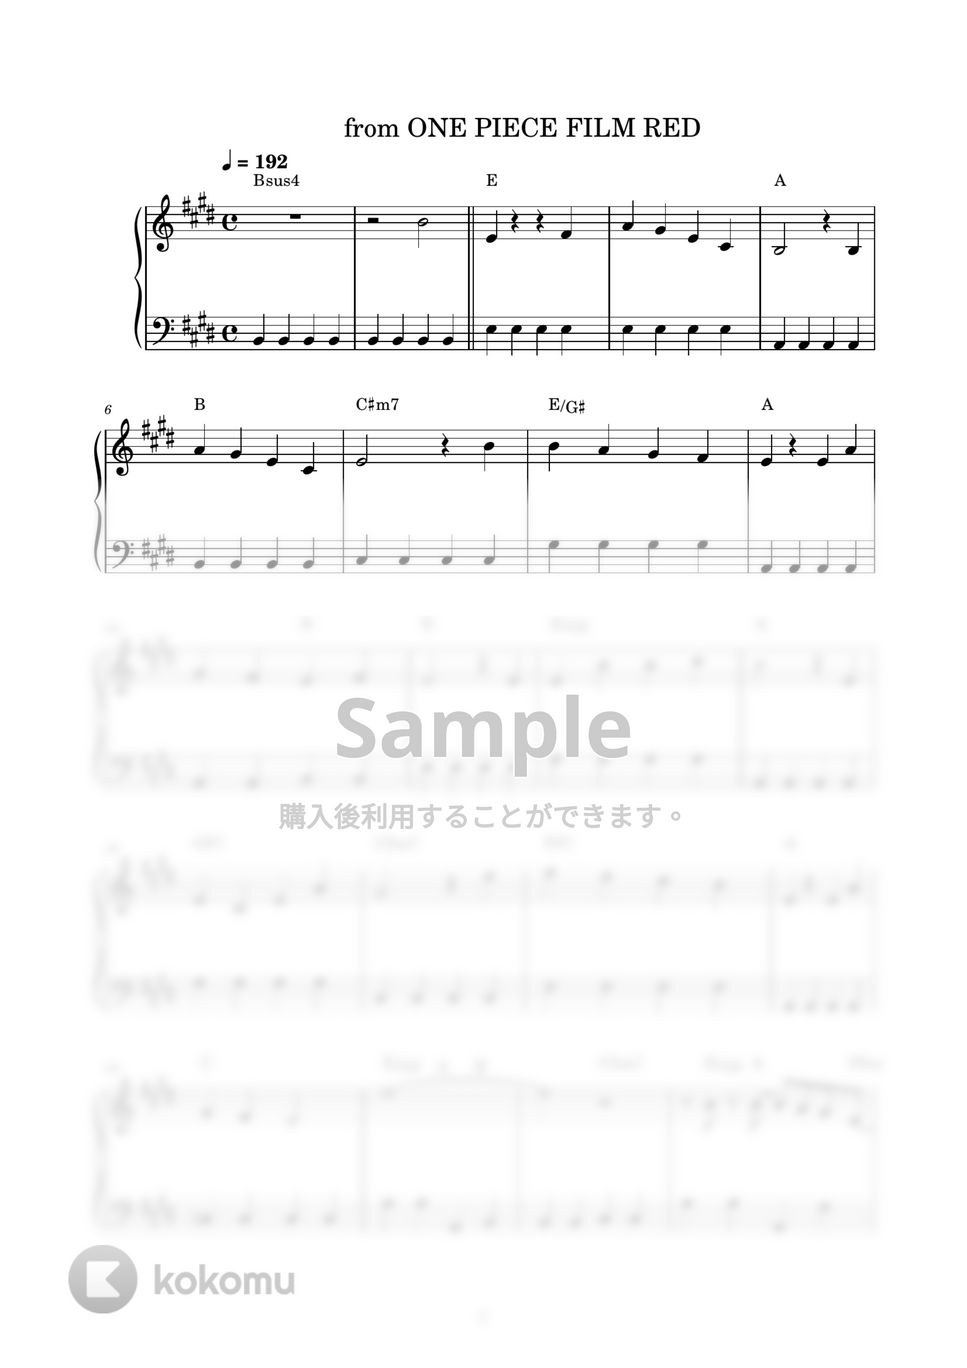 Ado - 私は最強 (ウタ from ONE PIECE FILM RED) (ピアノ楽譜 / かんたん両手 / 歌詞付き / ドレミ付き / 初心者向き) by piano.tokyo